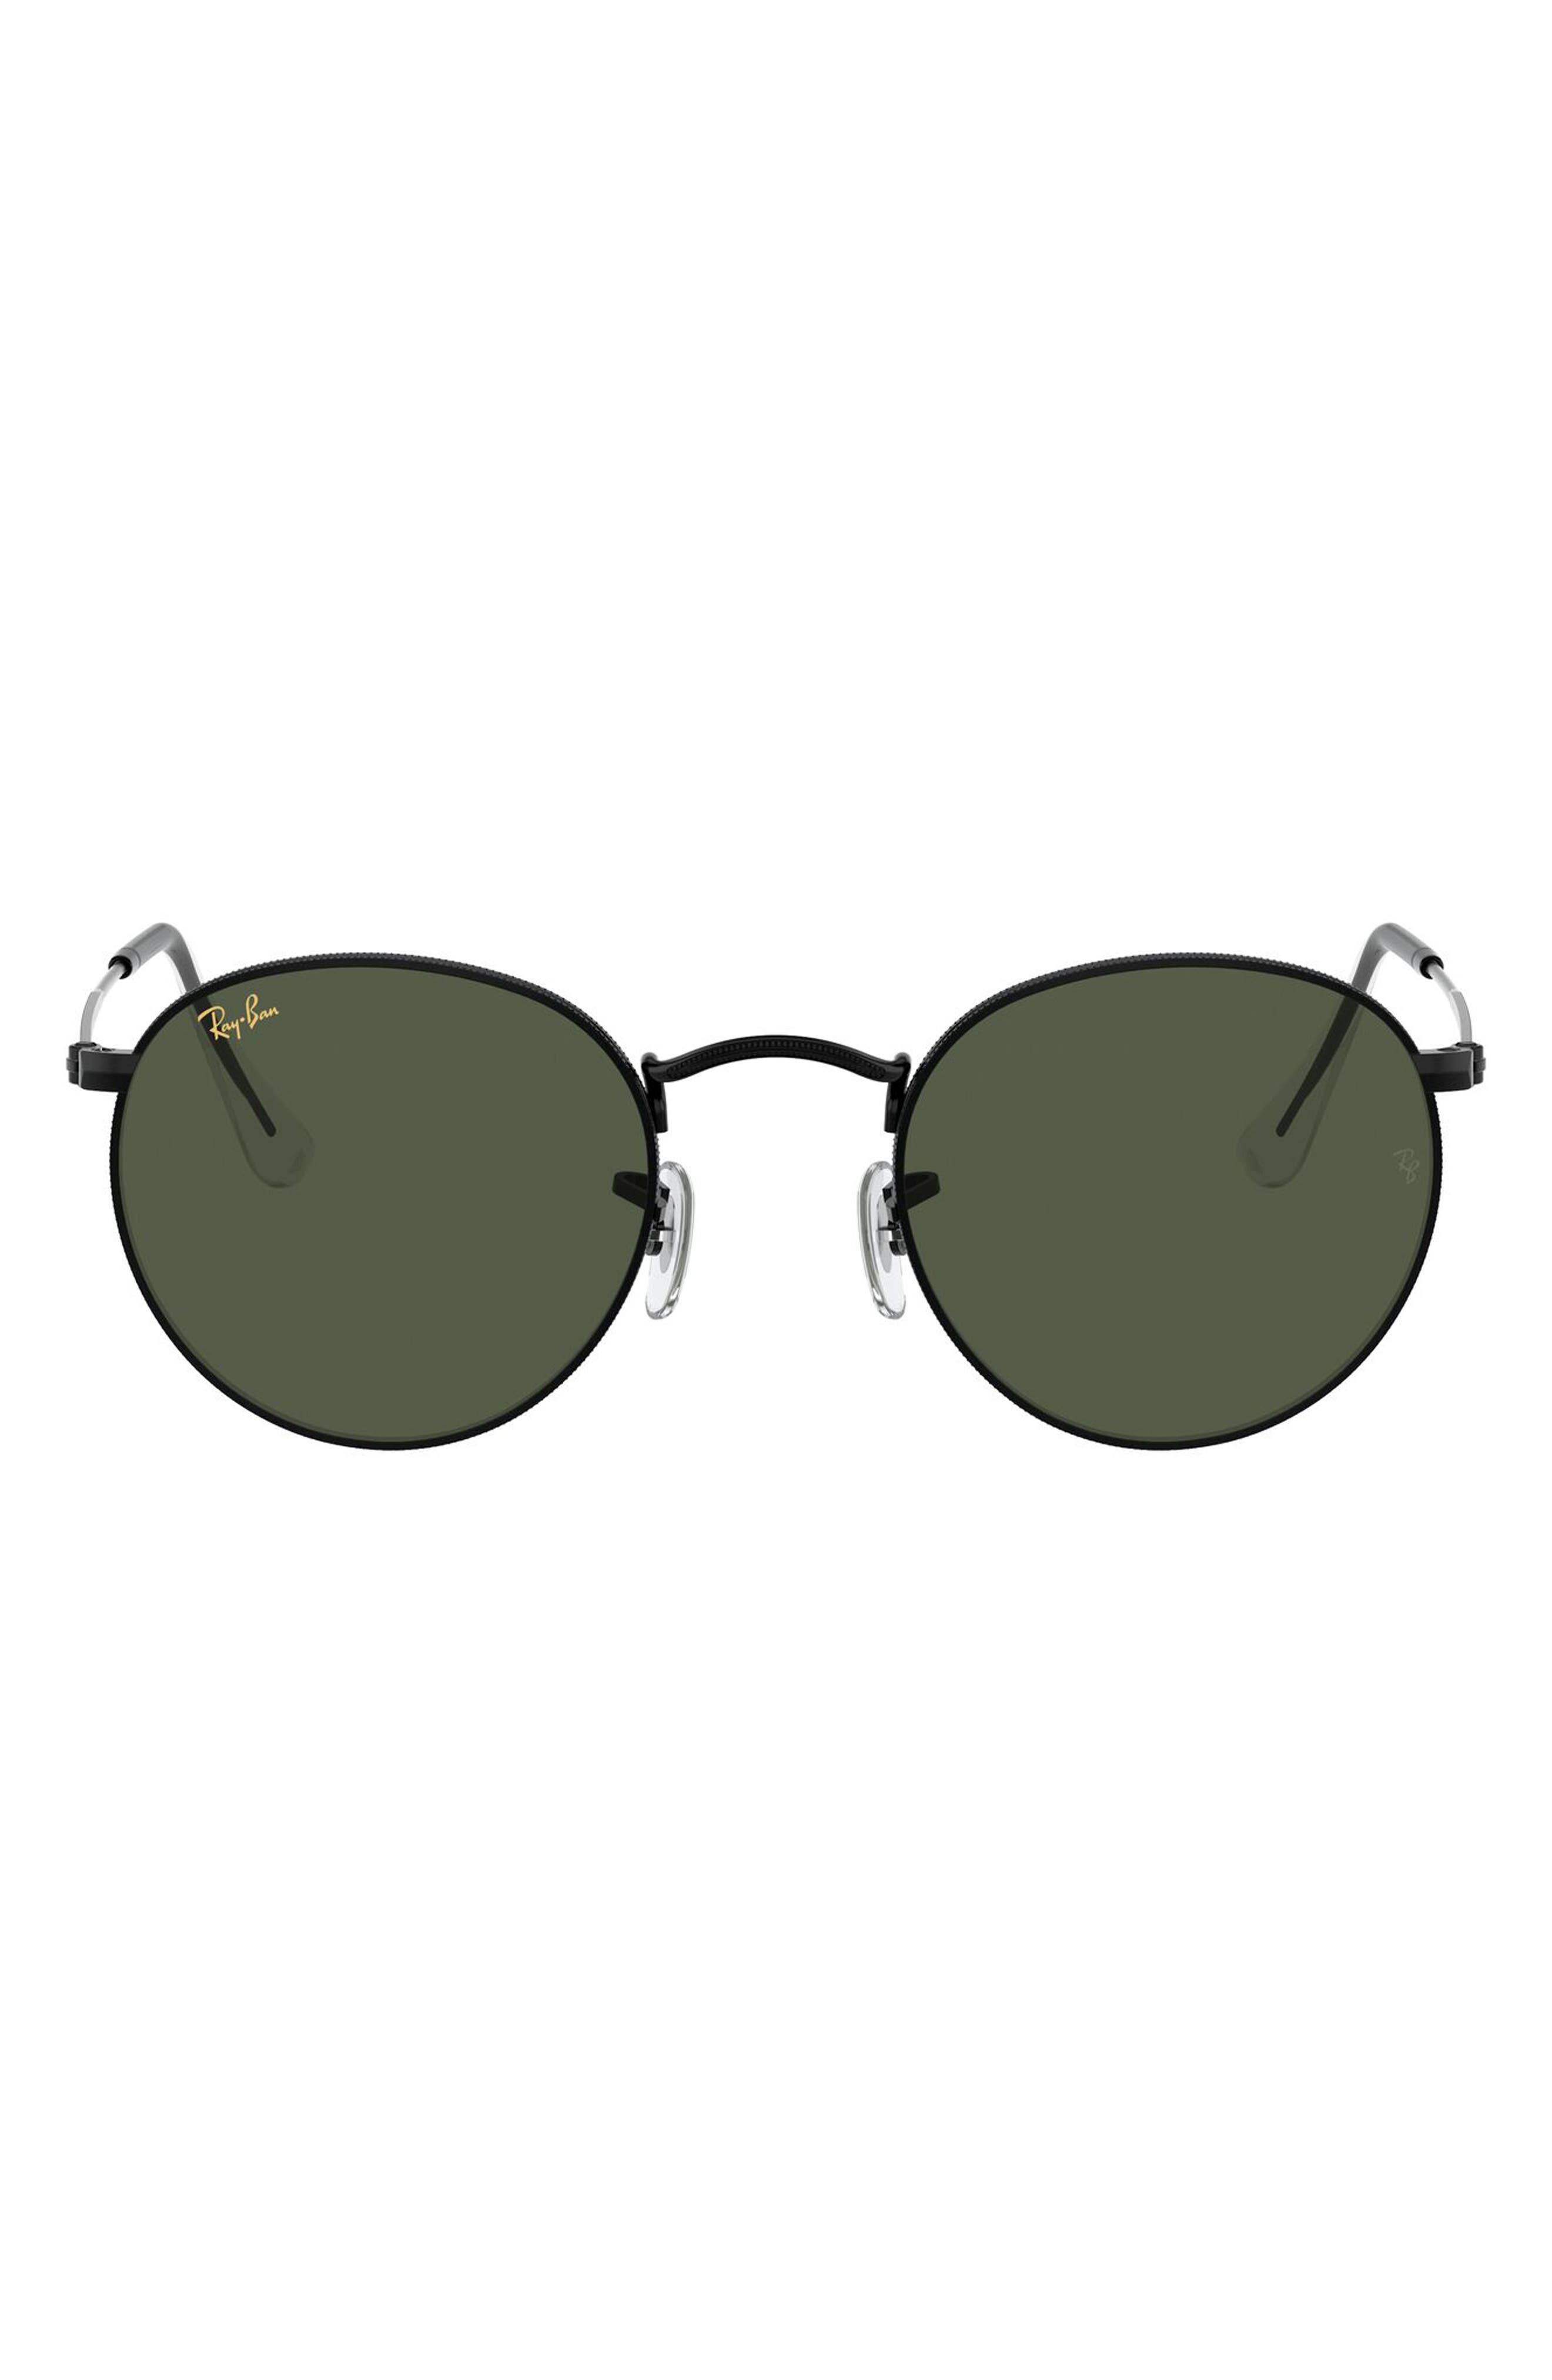 ray ban 53mm retro sunglasses